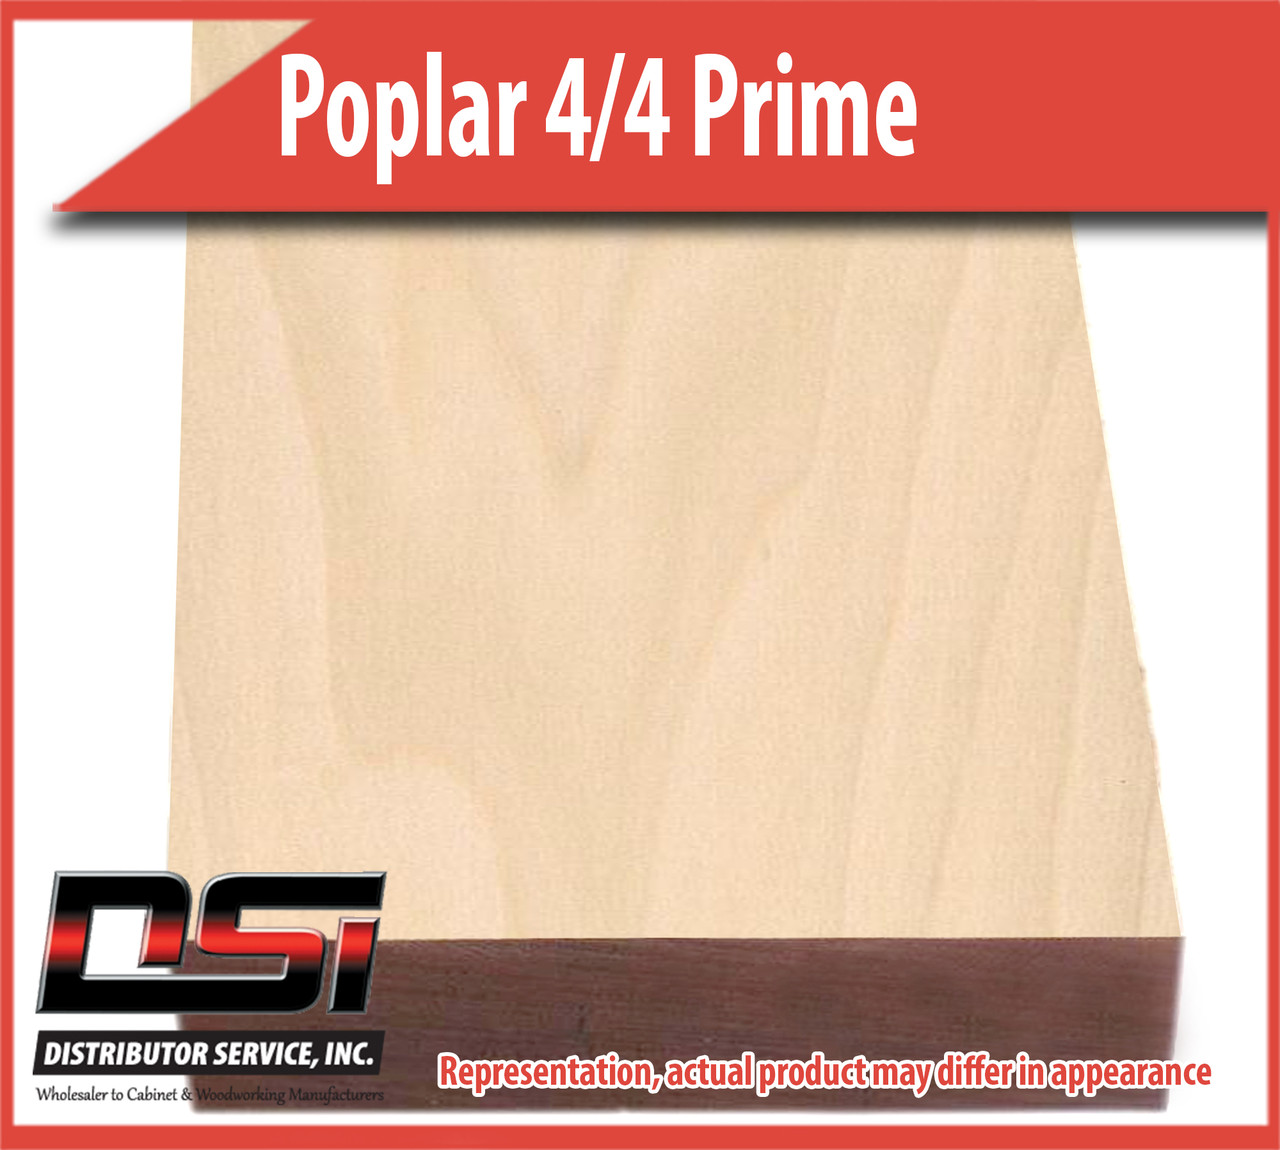 Domestic Hardwood Lumber Poplar 4/4 Prime 13/16" S2S 9'-10' SLR1E